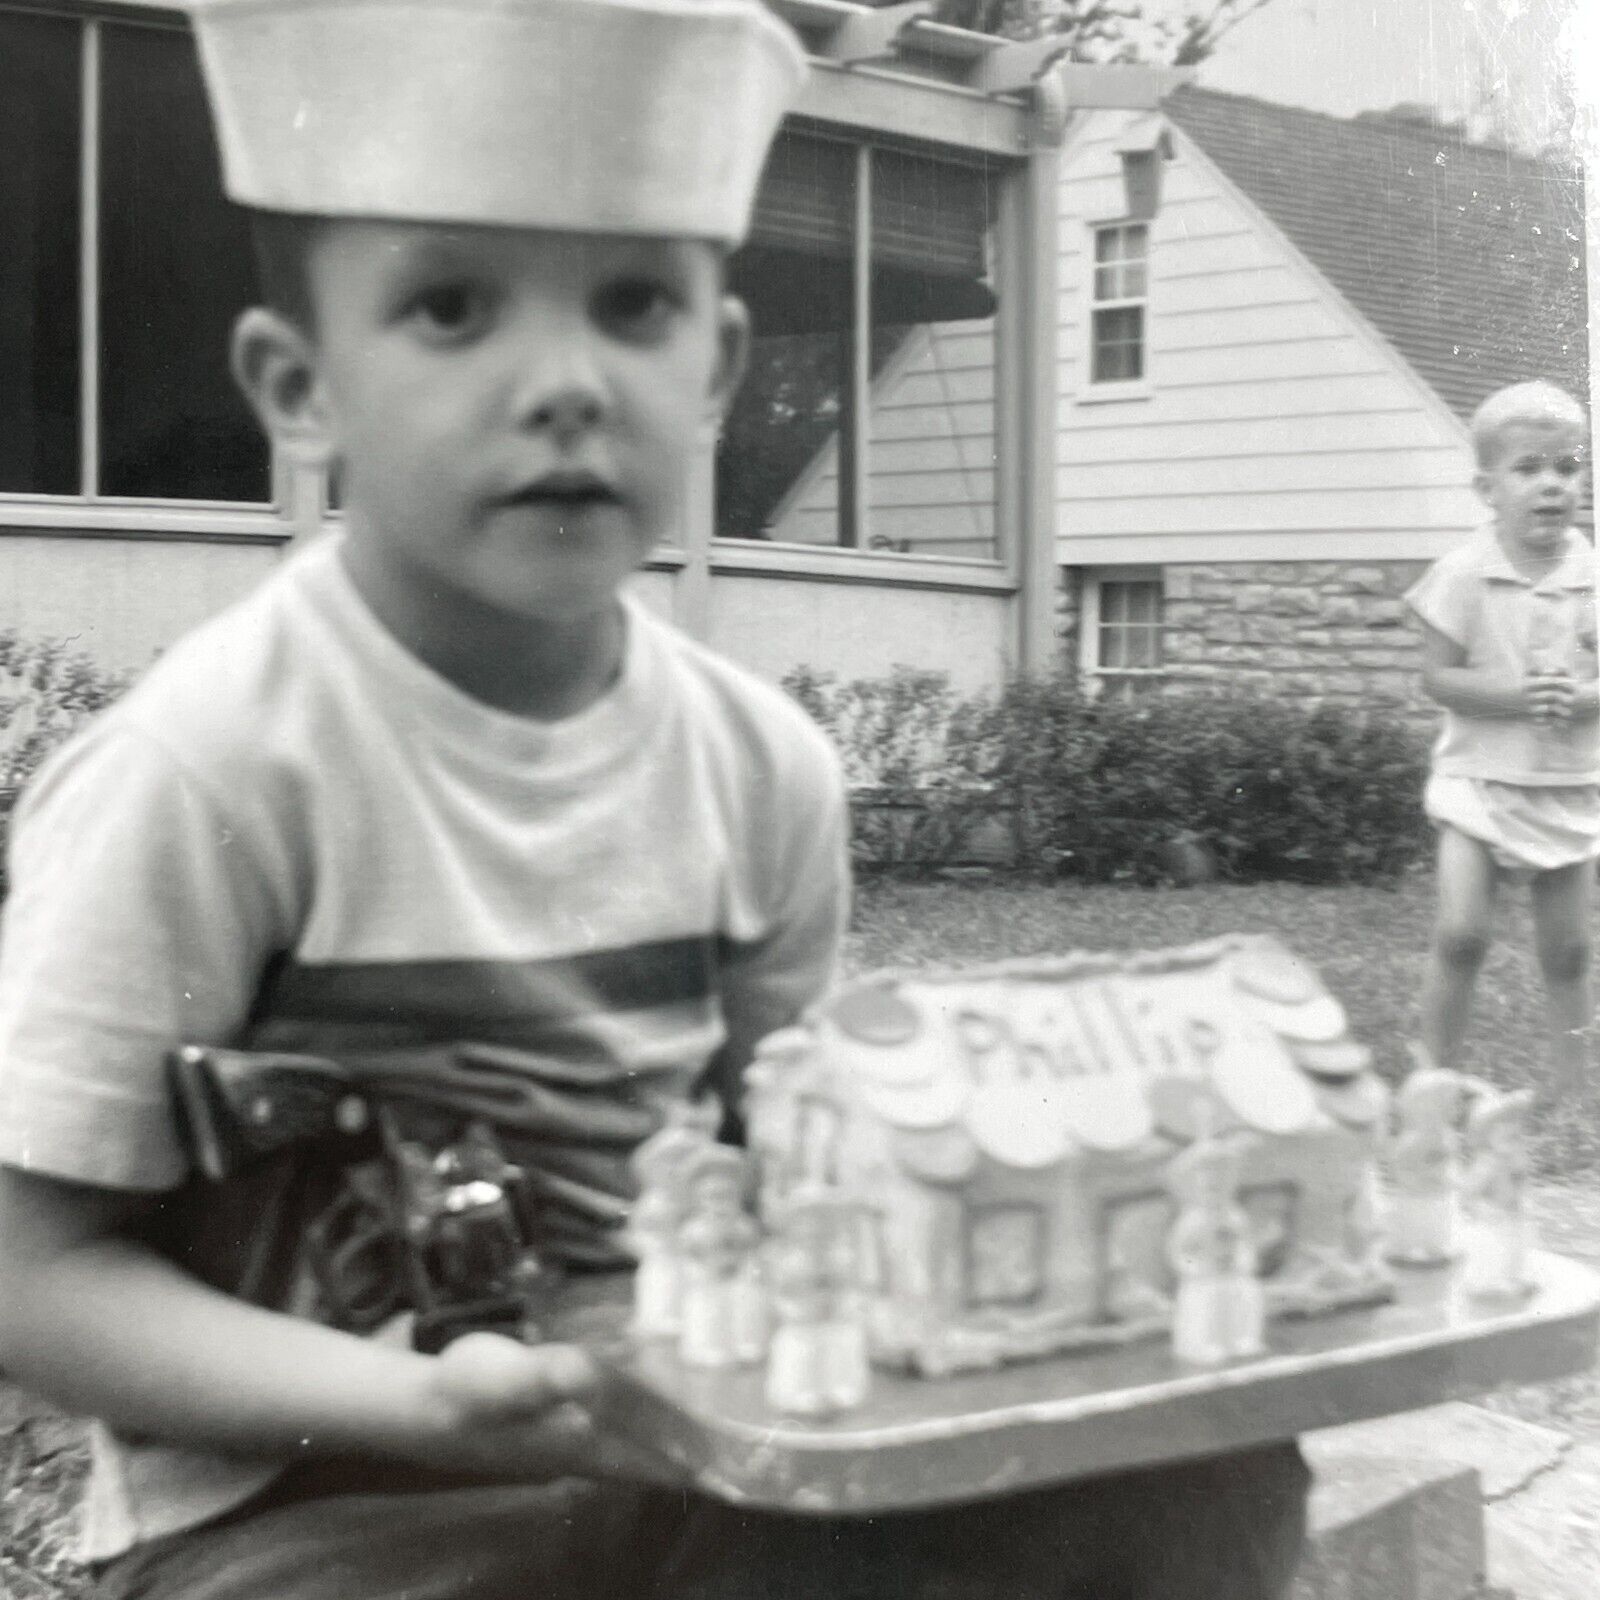 G1 Photograph Philip Birthday Cake 1950's Boy Portrait